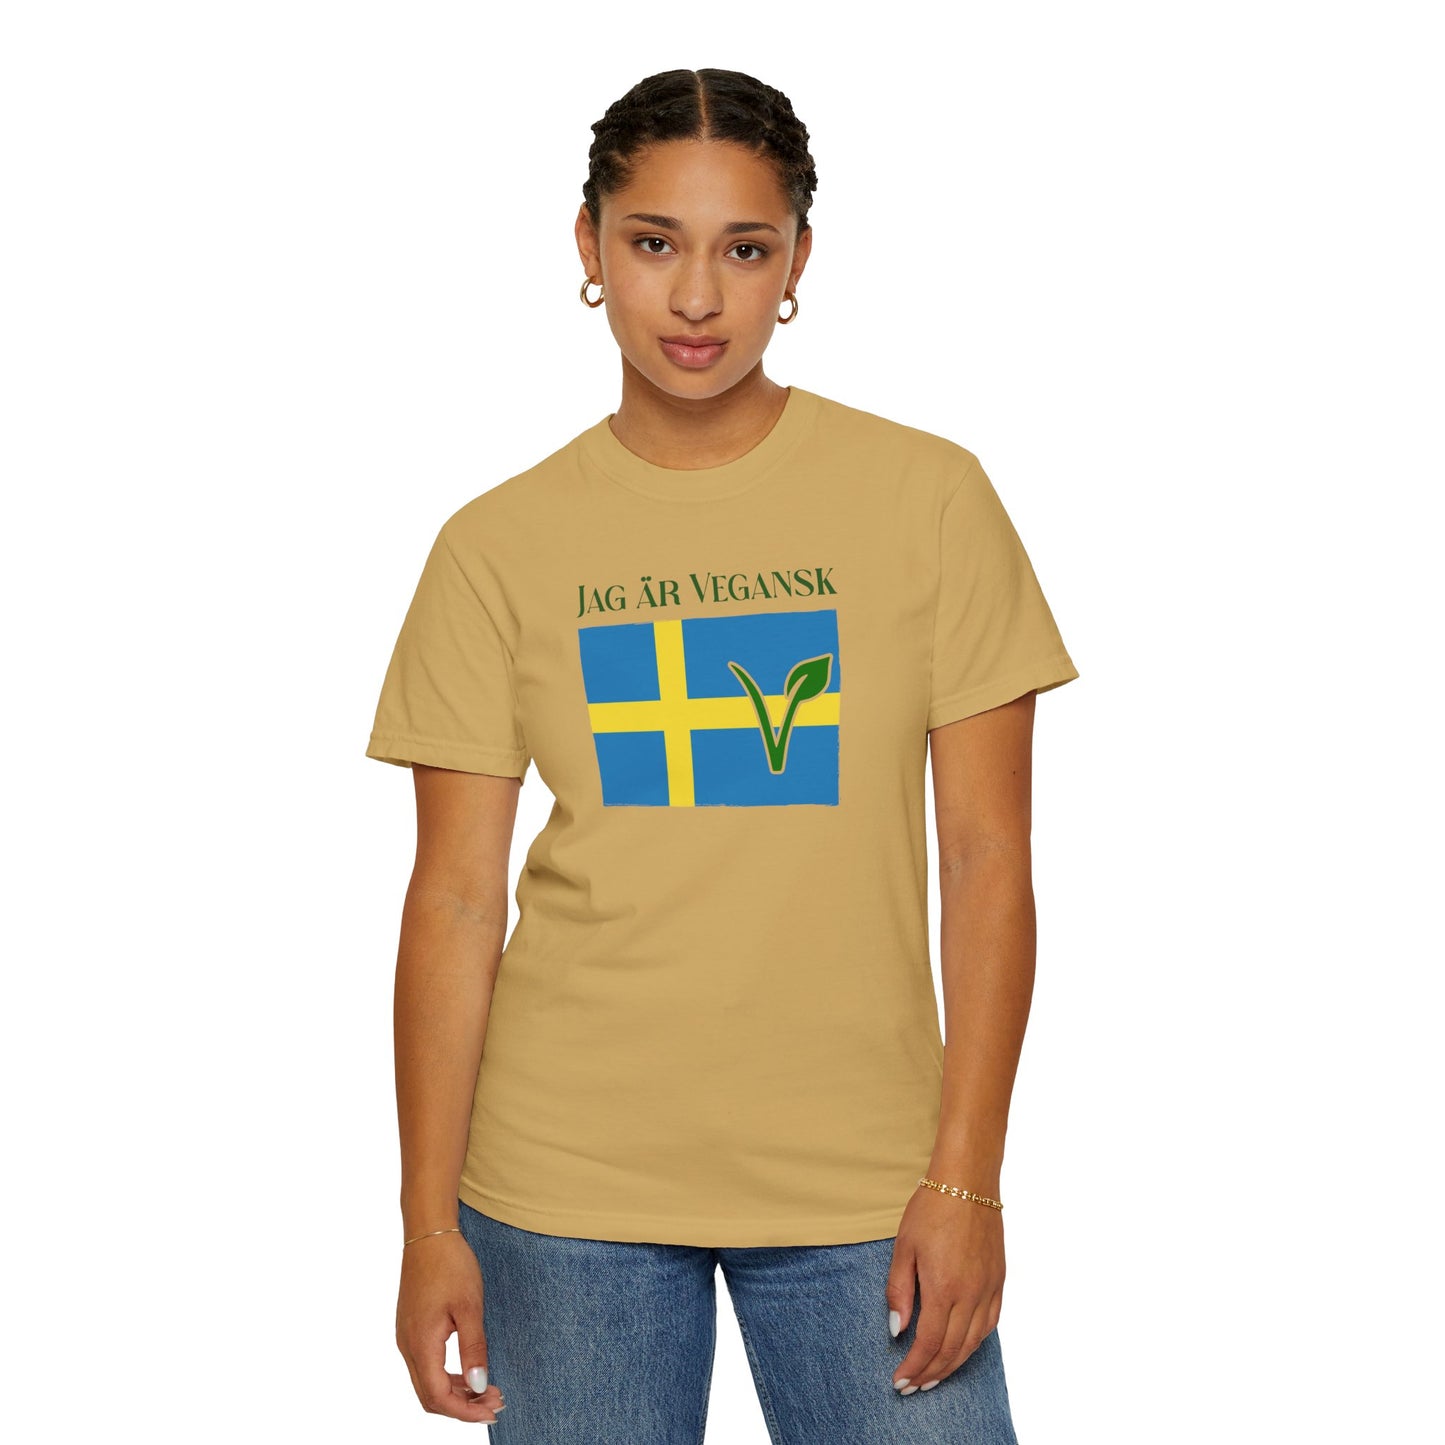 Jag är Vegansk Swedish Vegan Tee Shirt in Light and Tropical Colors {Unisex}